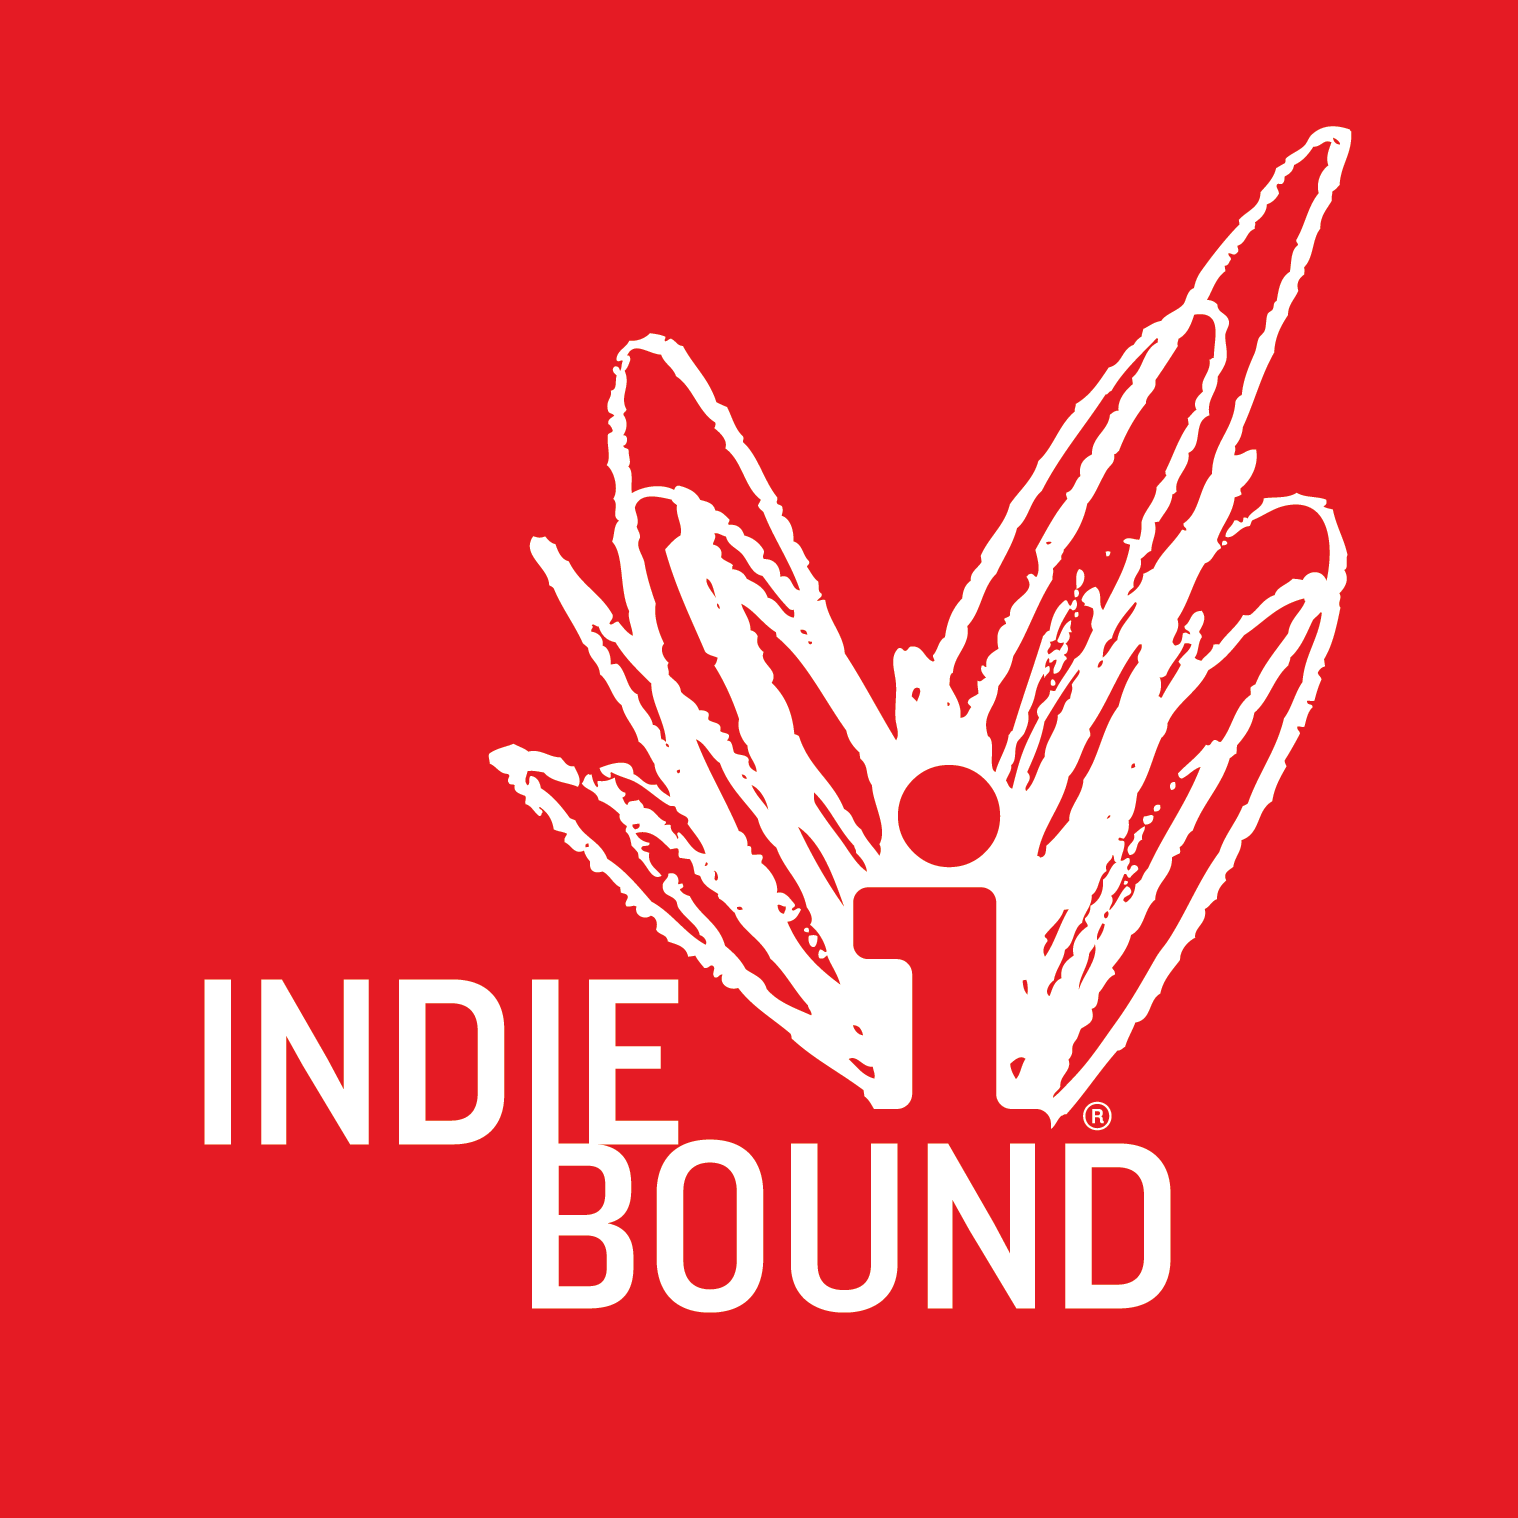 Link to Indie Bound’s website